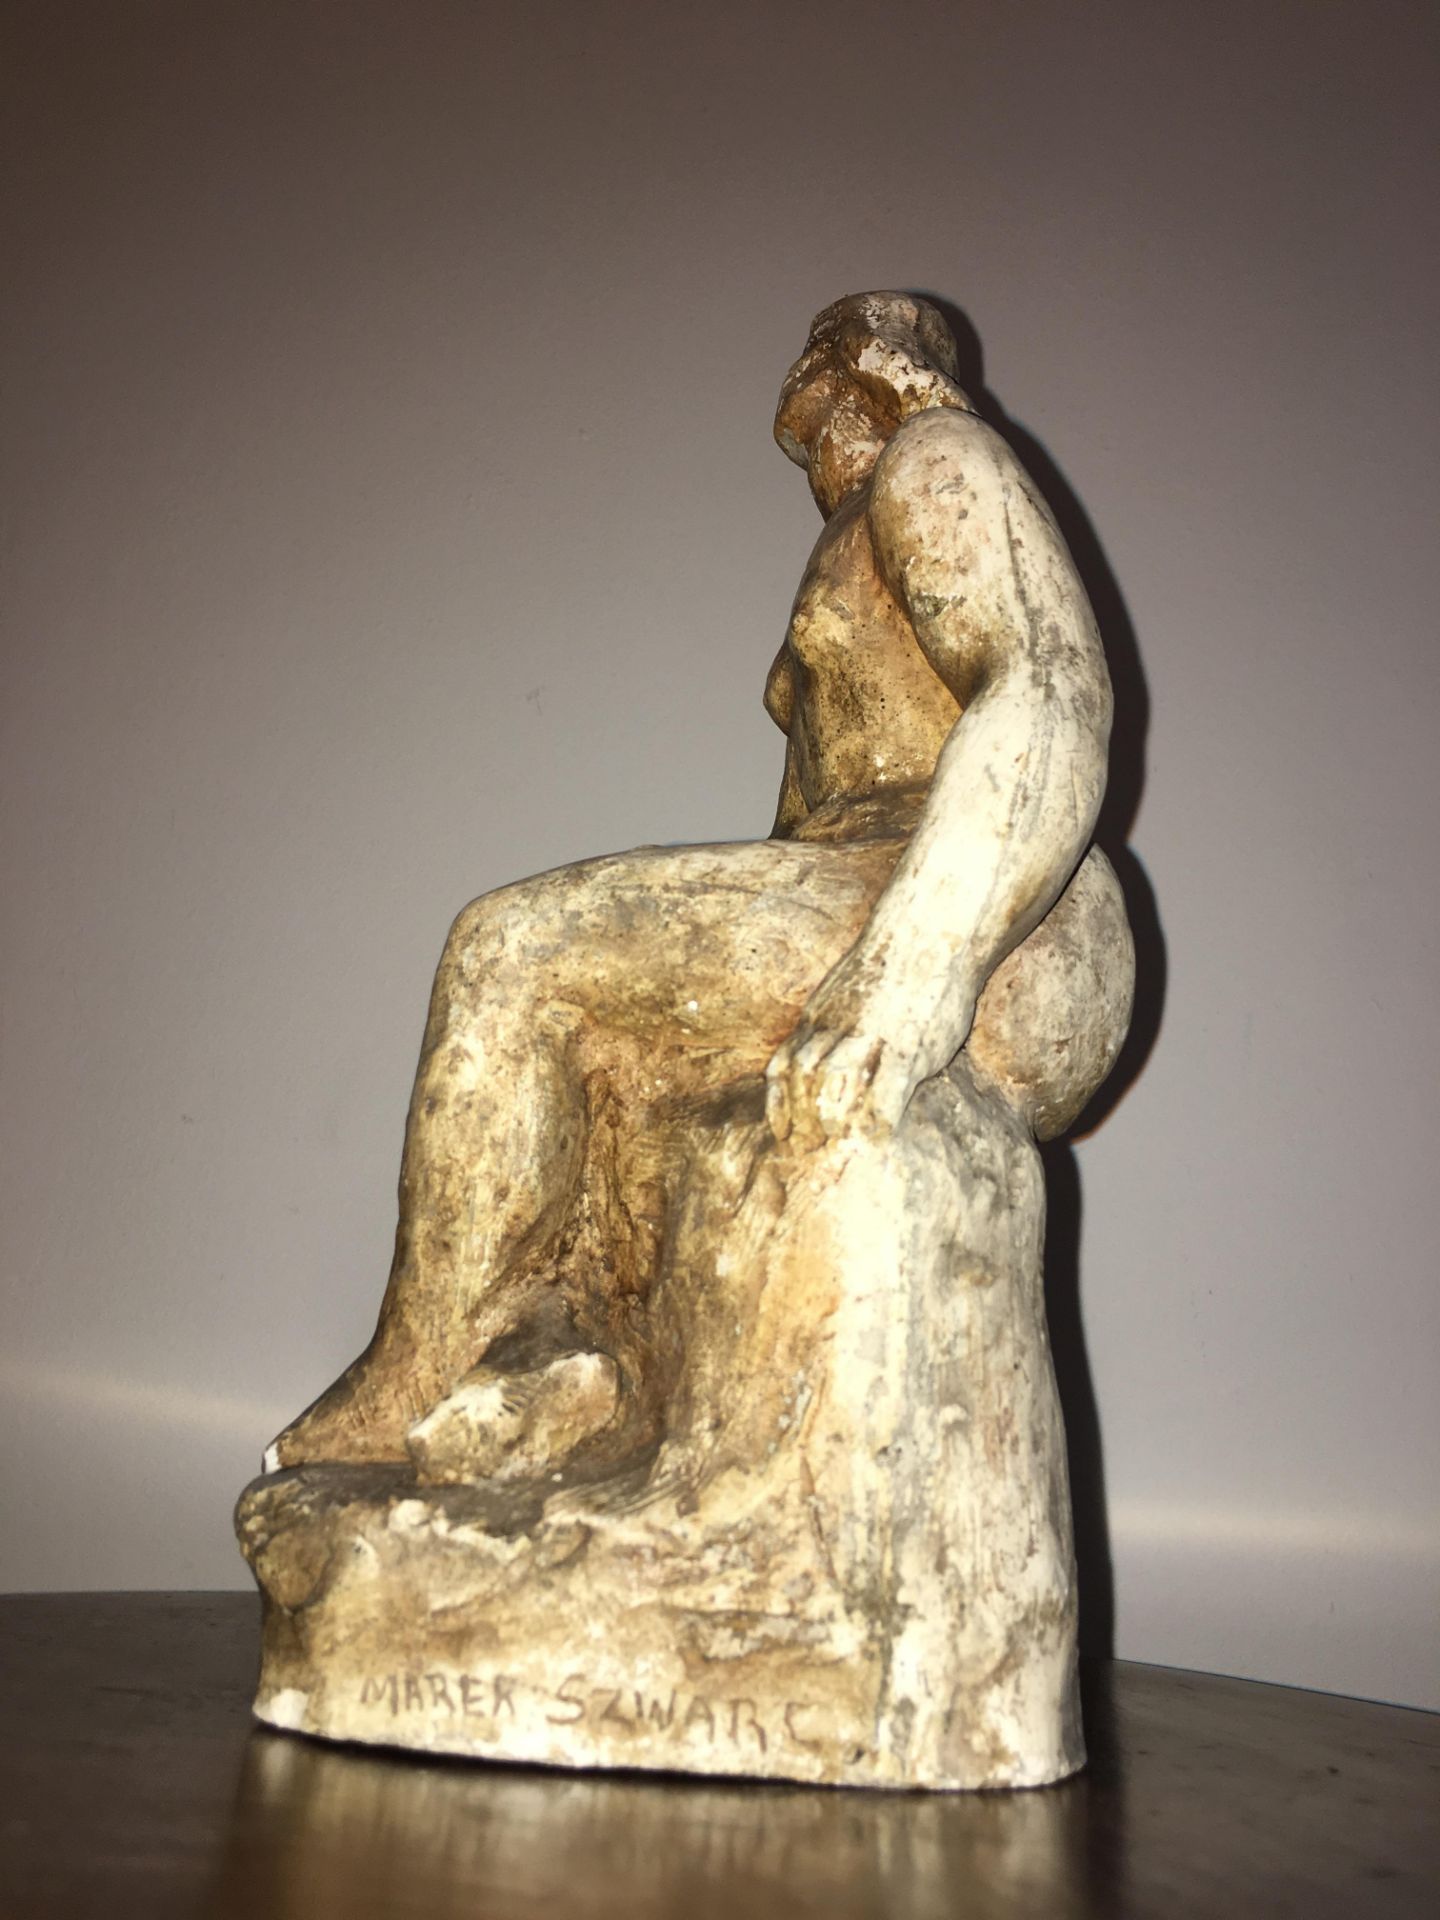 Seated female plaster sculpture by Marek Szwarc - Image 2 of 6